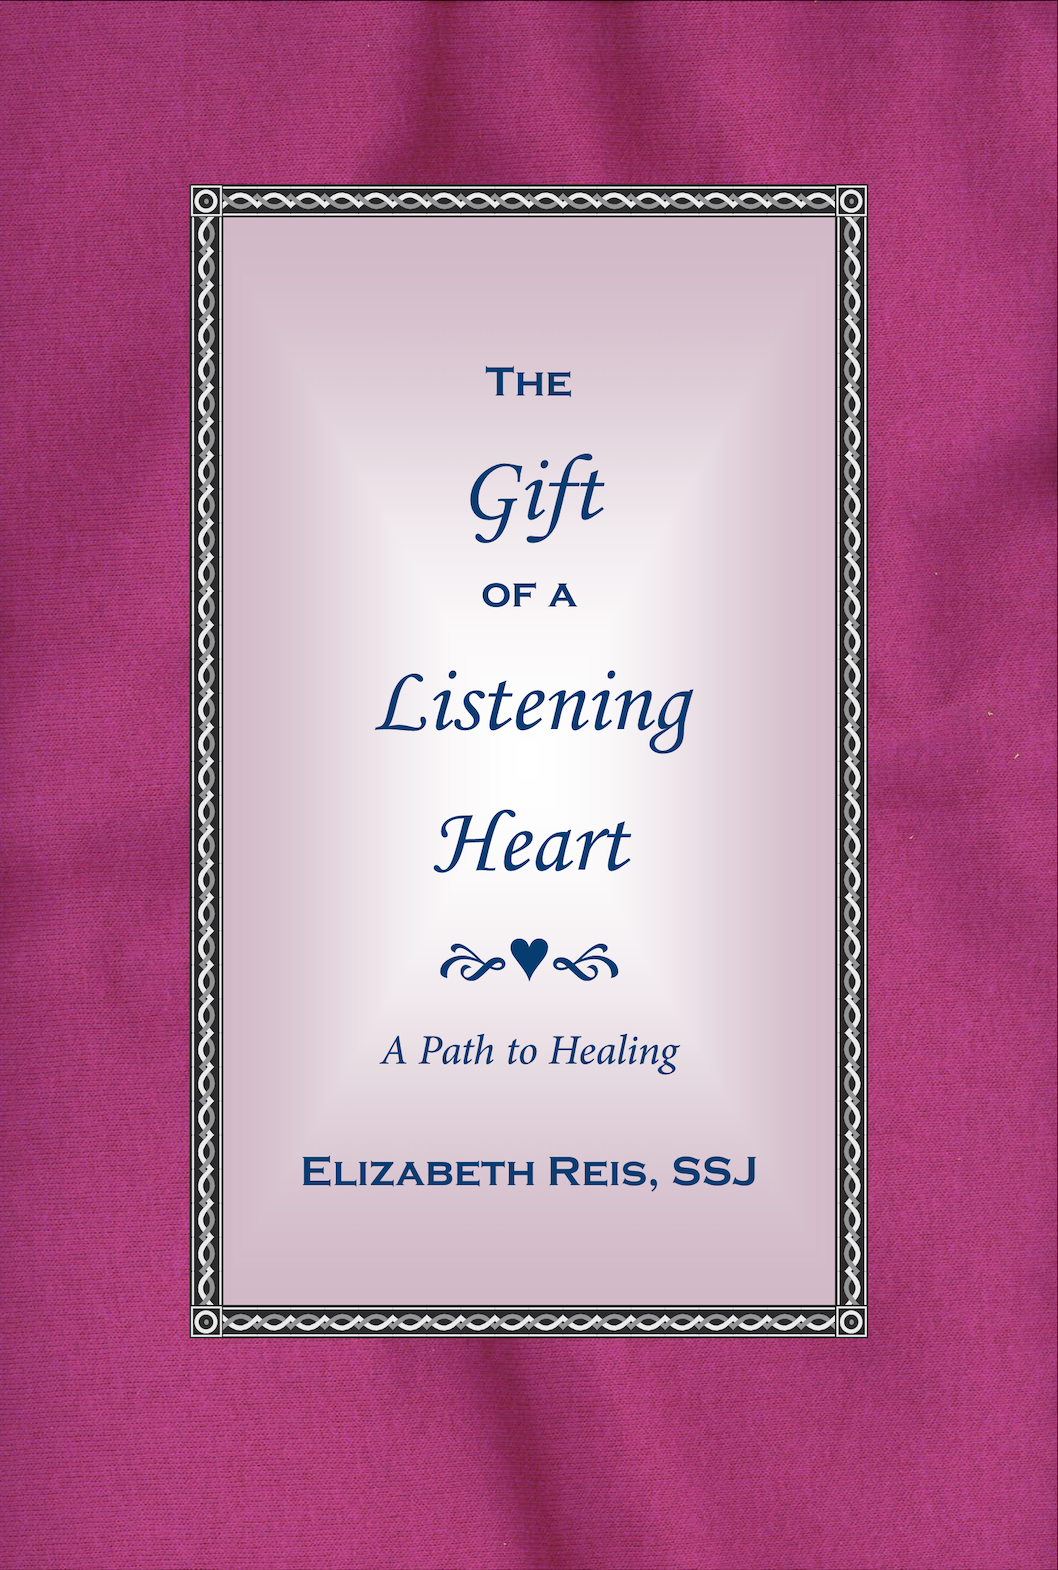 The Gift of a Listening Heart - A Path to Healing  by Elizabeth Reis, SSJ (EBOOK - PDF)